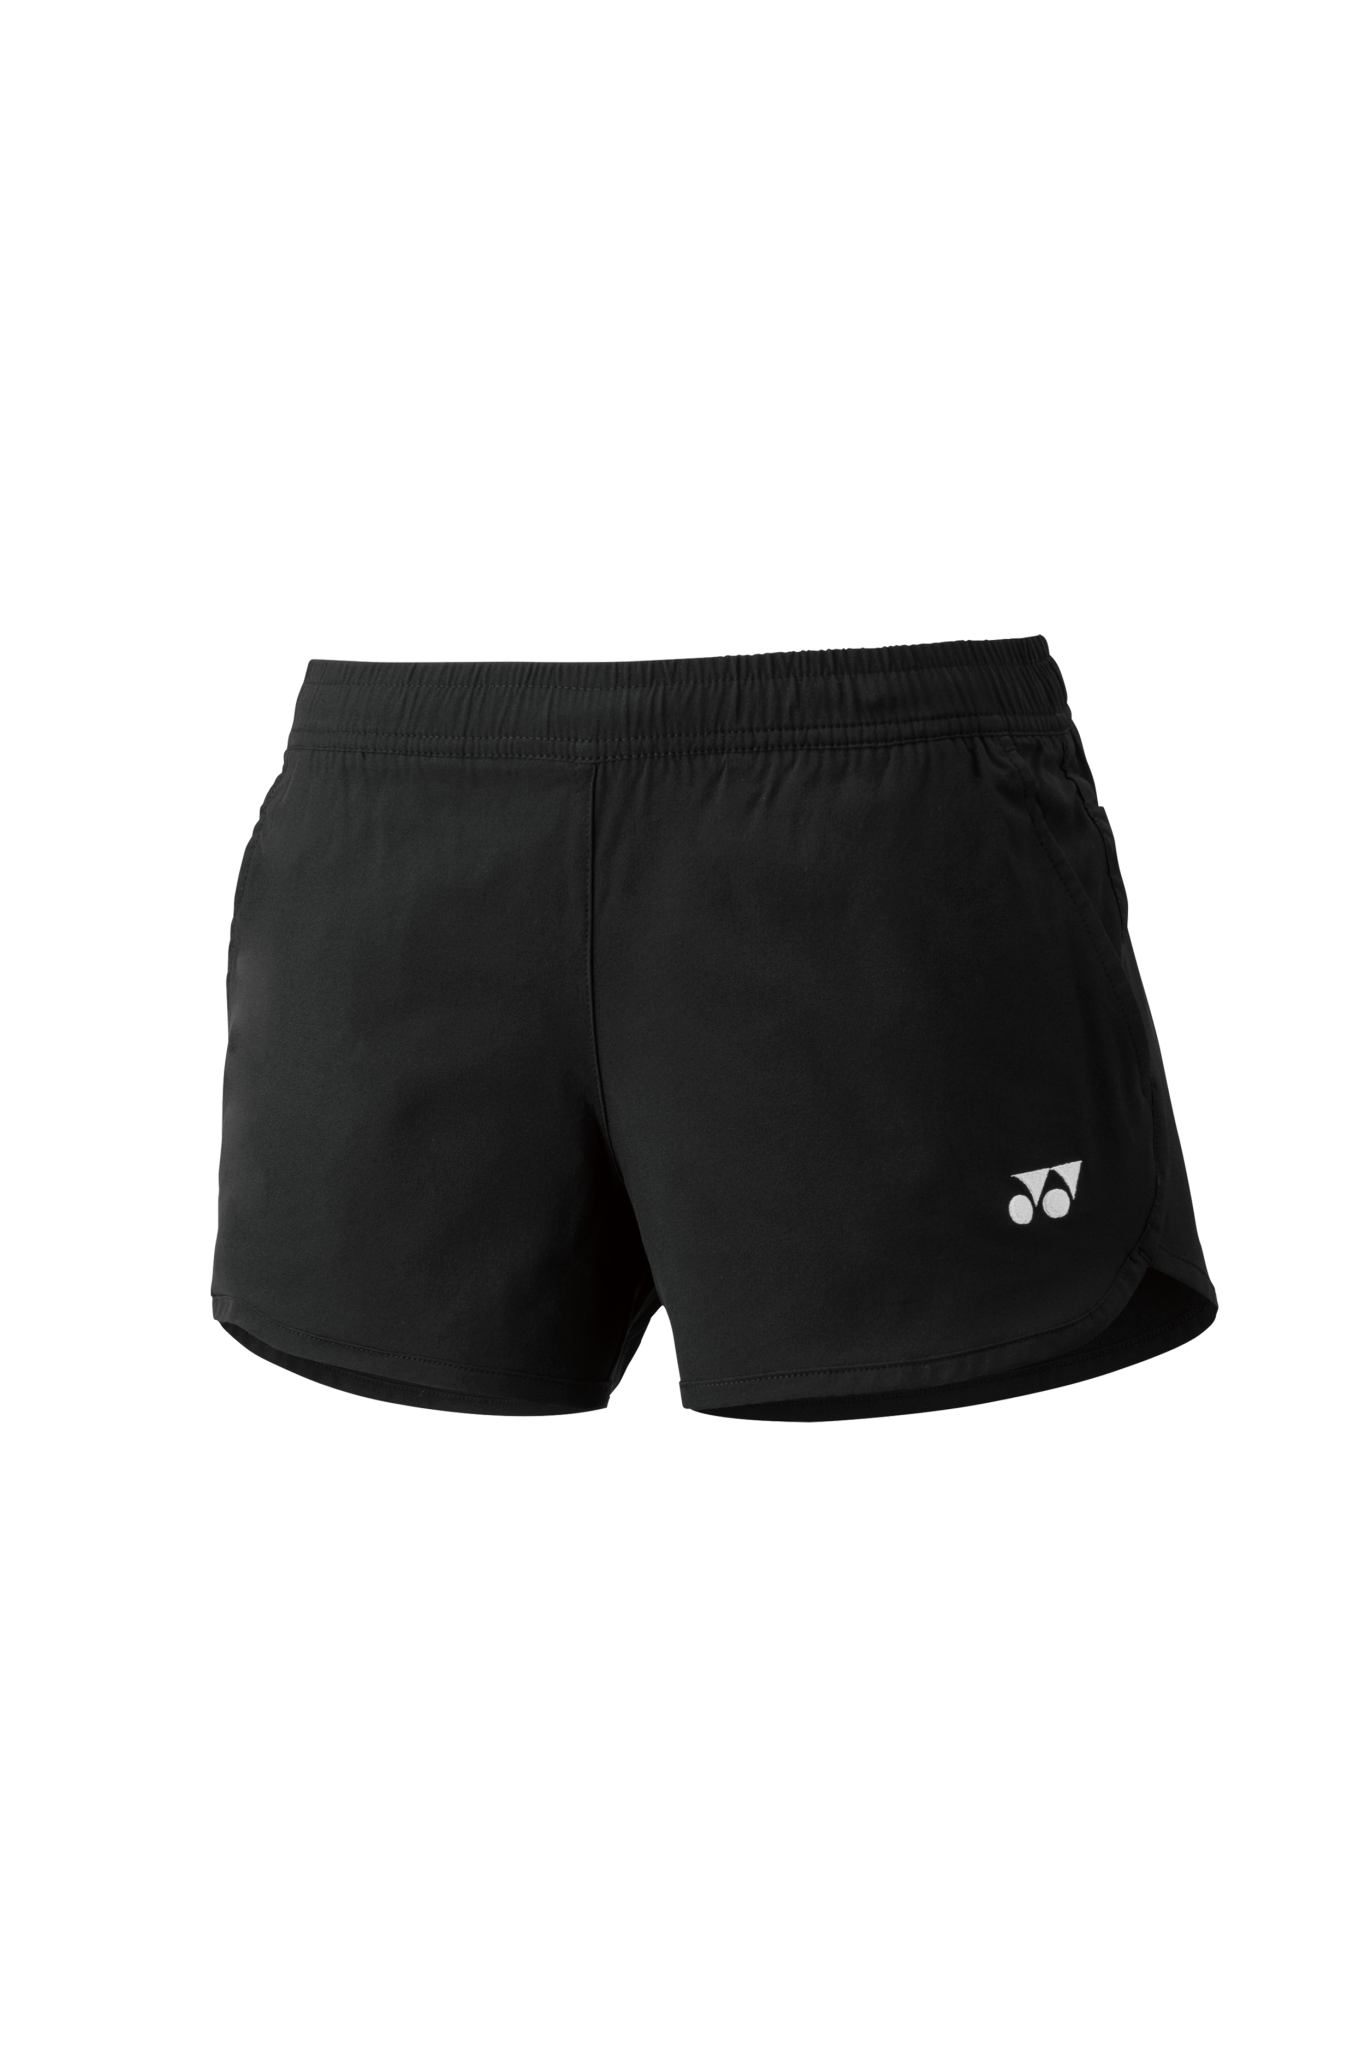 Yonex Women's Shorts 25037 (Black) - Nexus Badminton